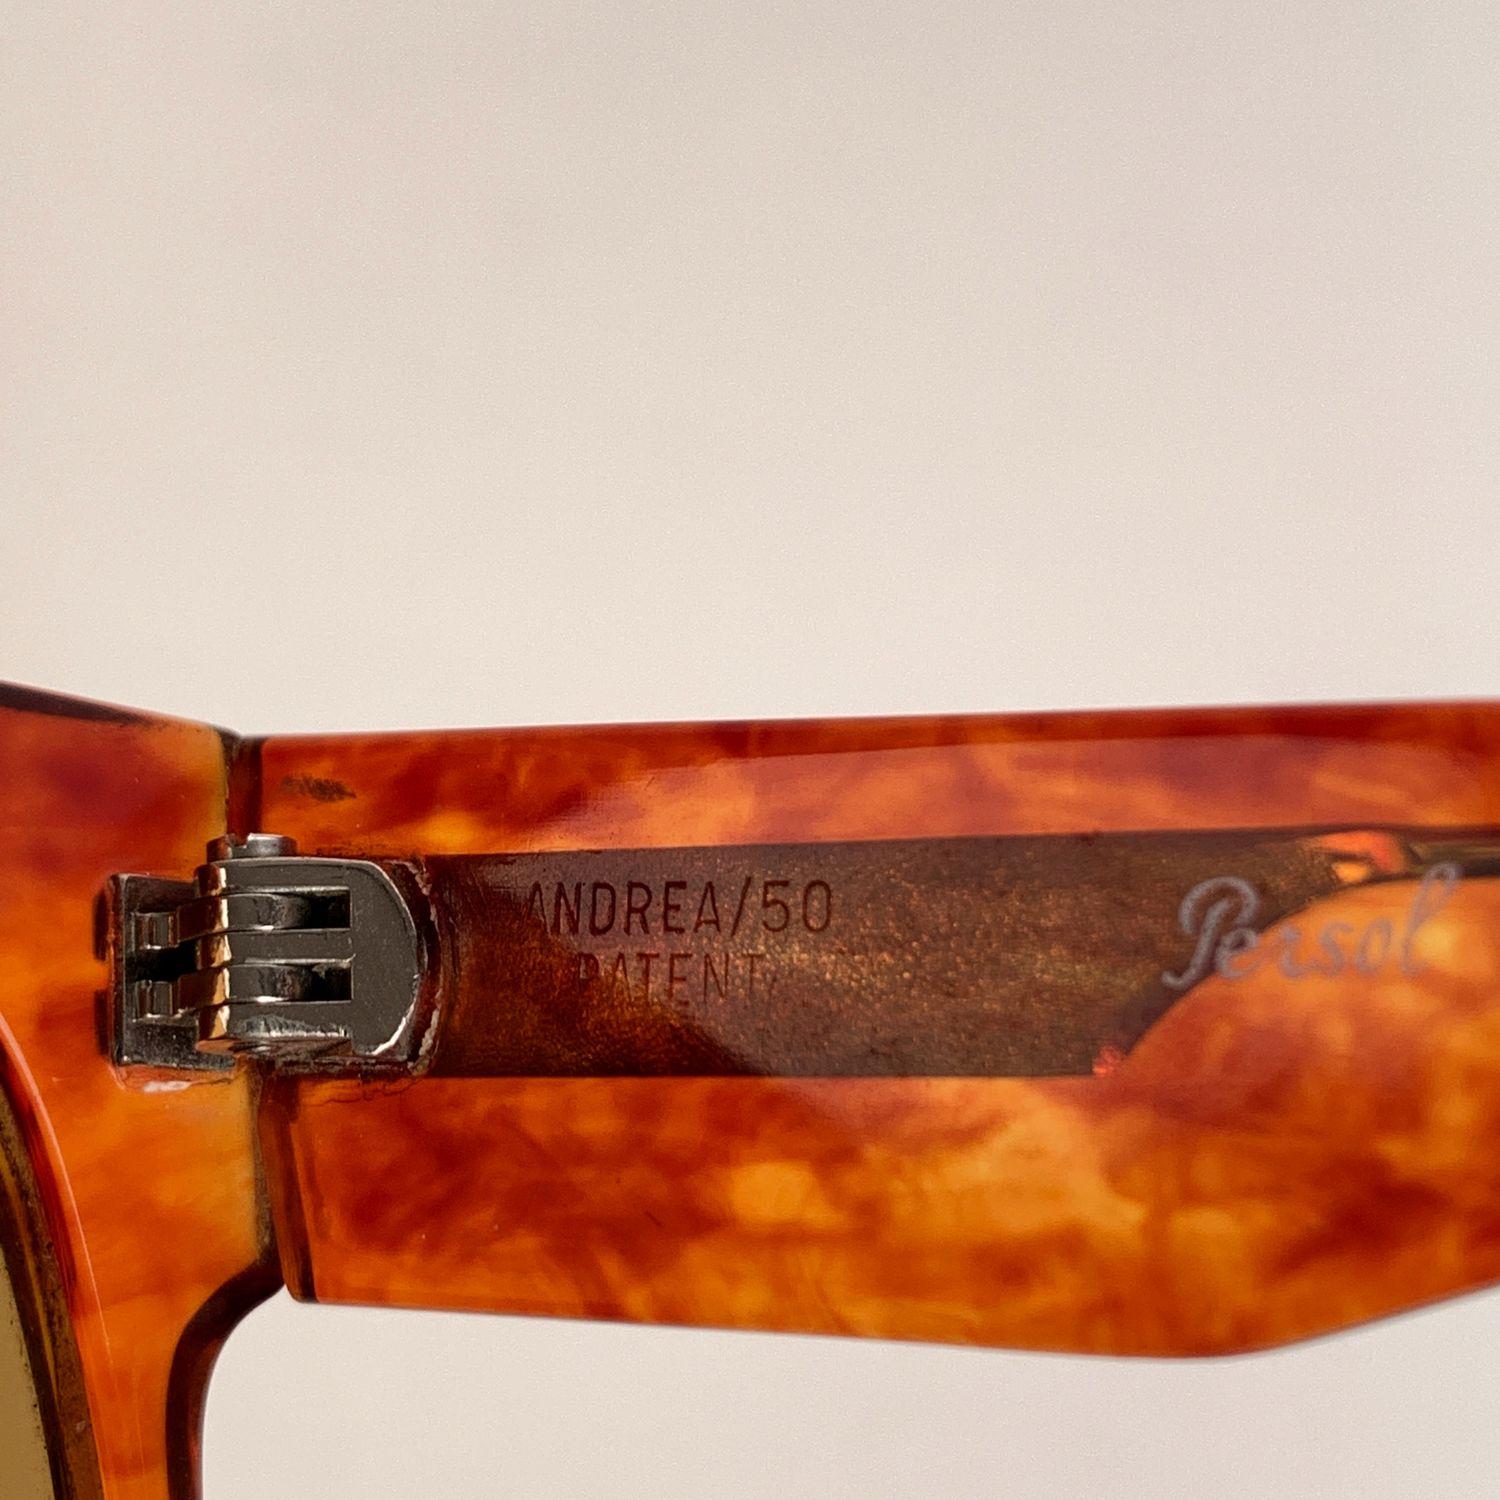 Persol Ratti Vintage Rare Mint Brown Sunglasses Mod. Andrea 50 In Excellent Condition For Sale In Rome, Rome